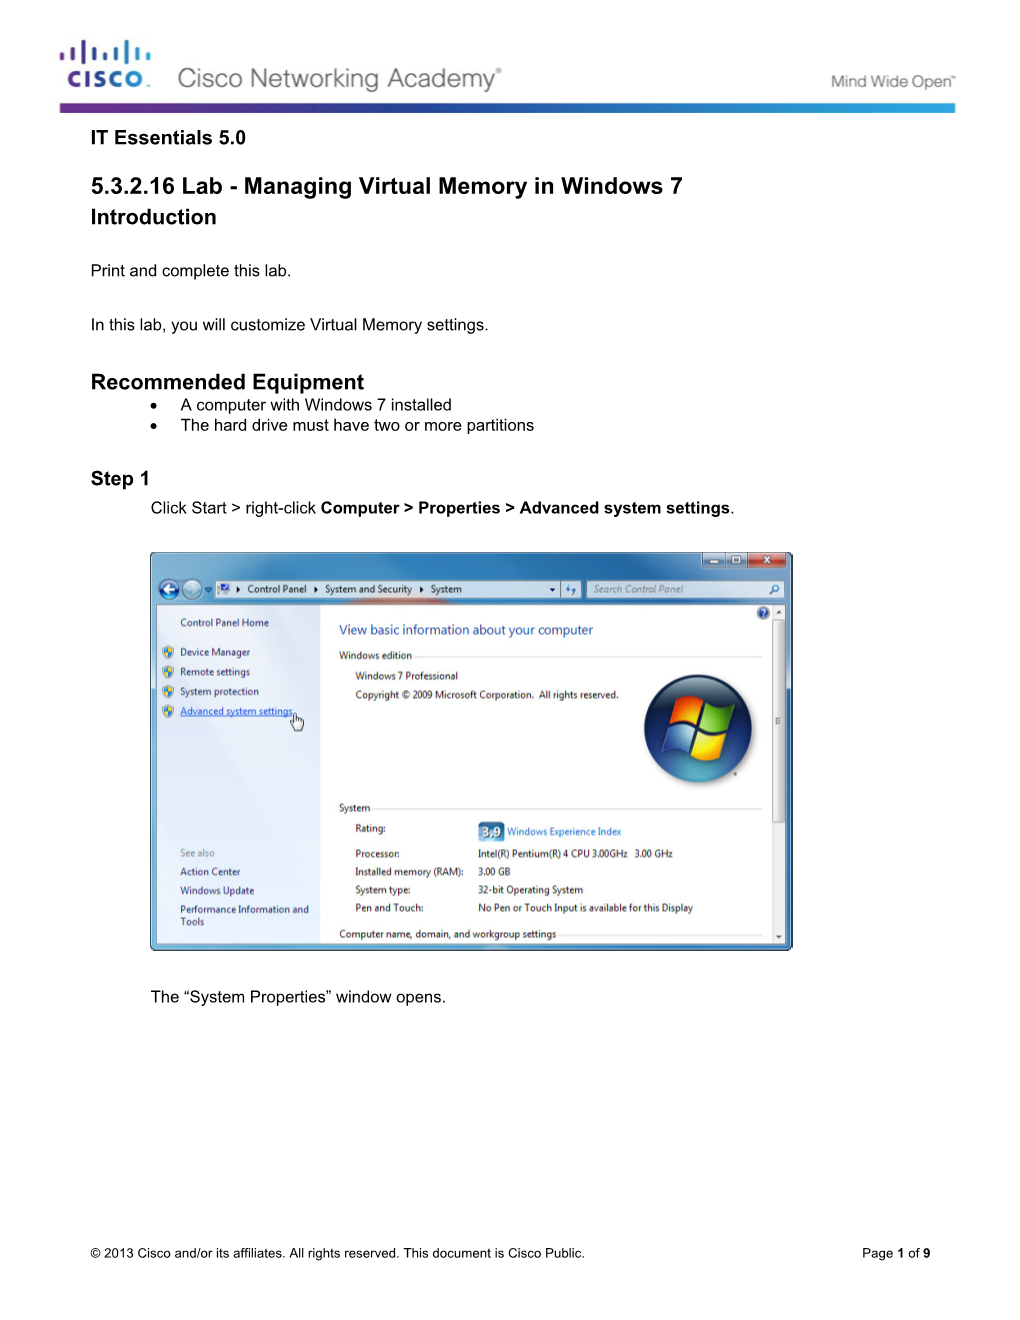 5.3.2.16 Lab - Managing Virtual Memory in Windows 7 Introduction